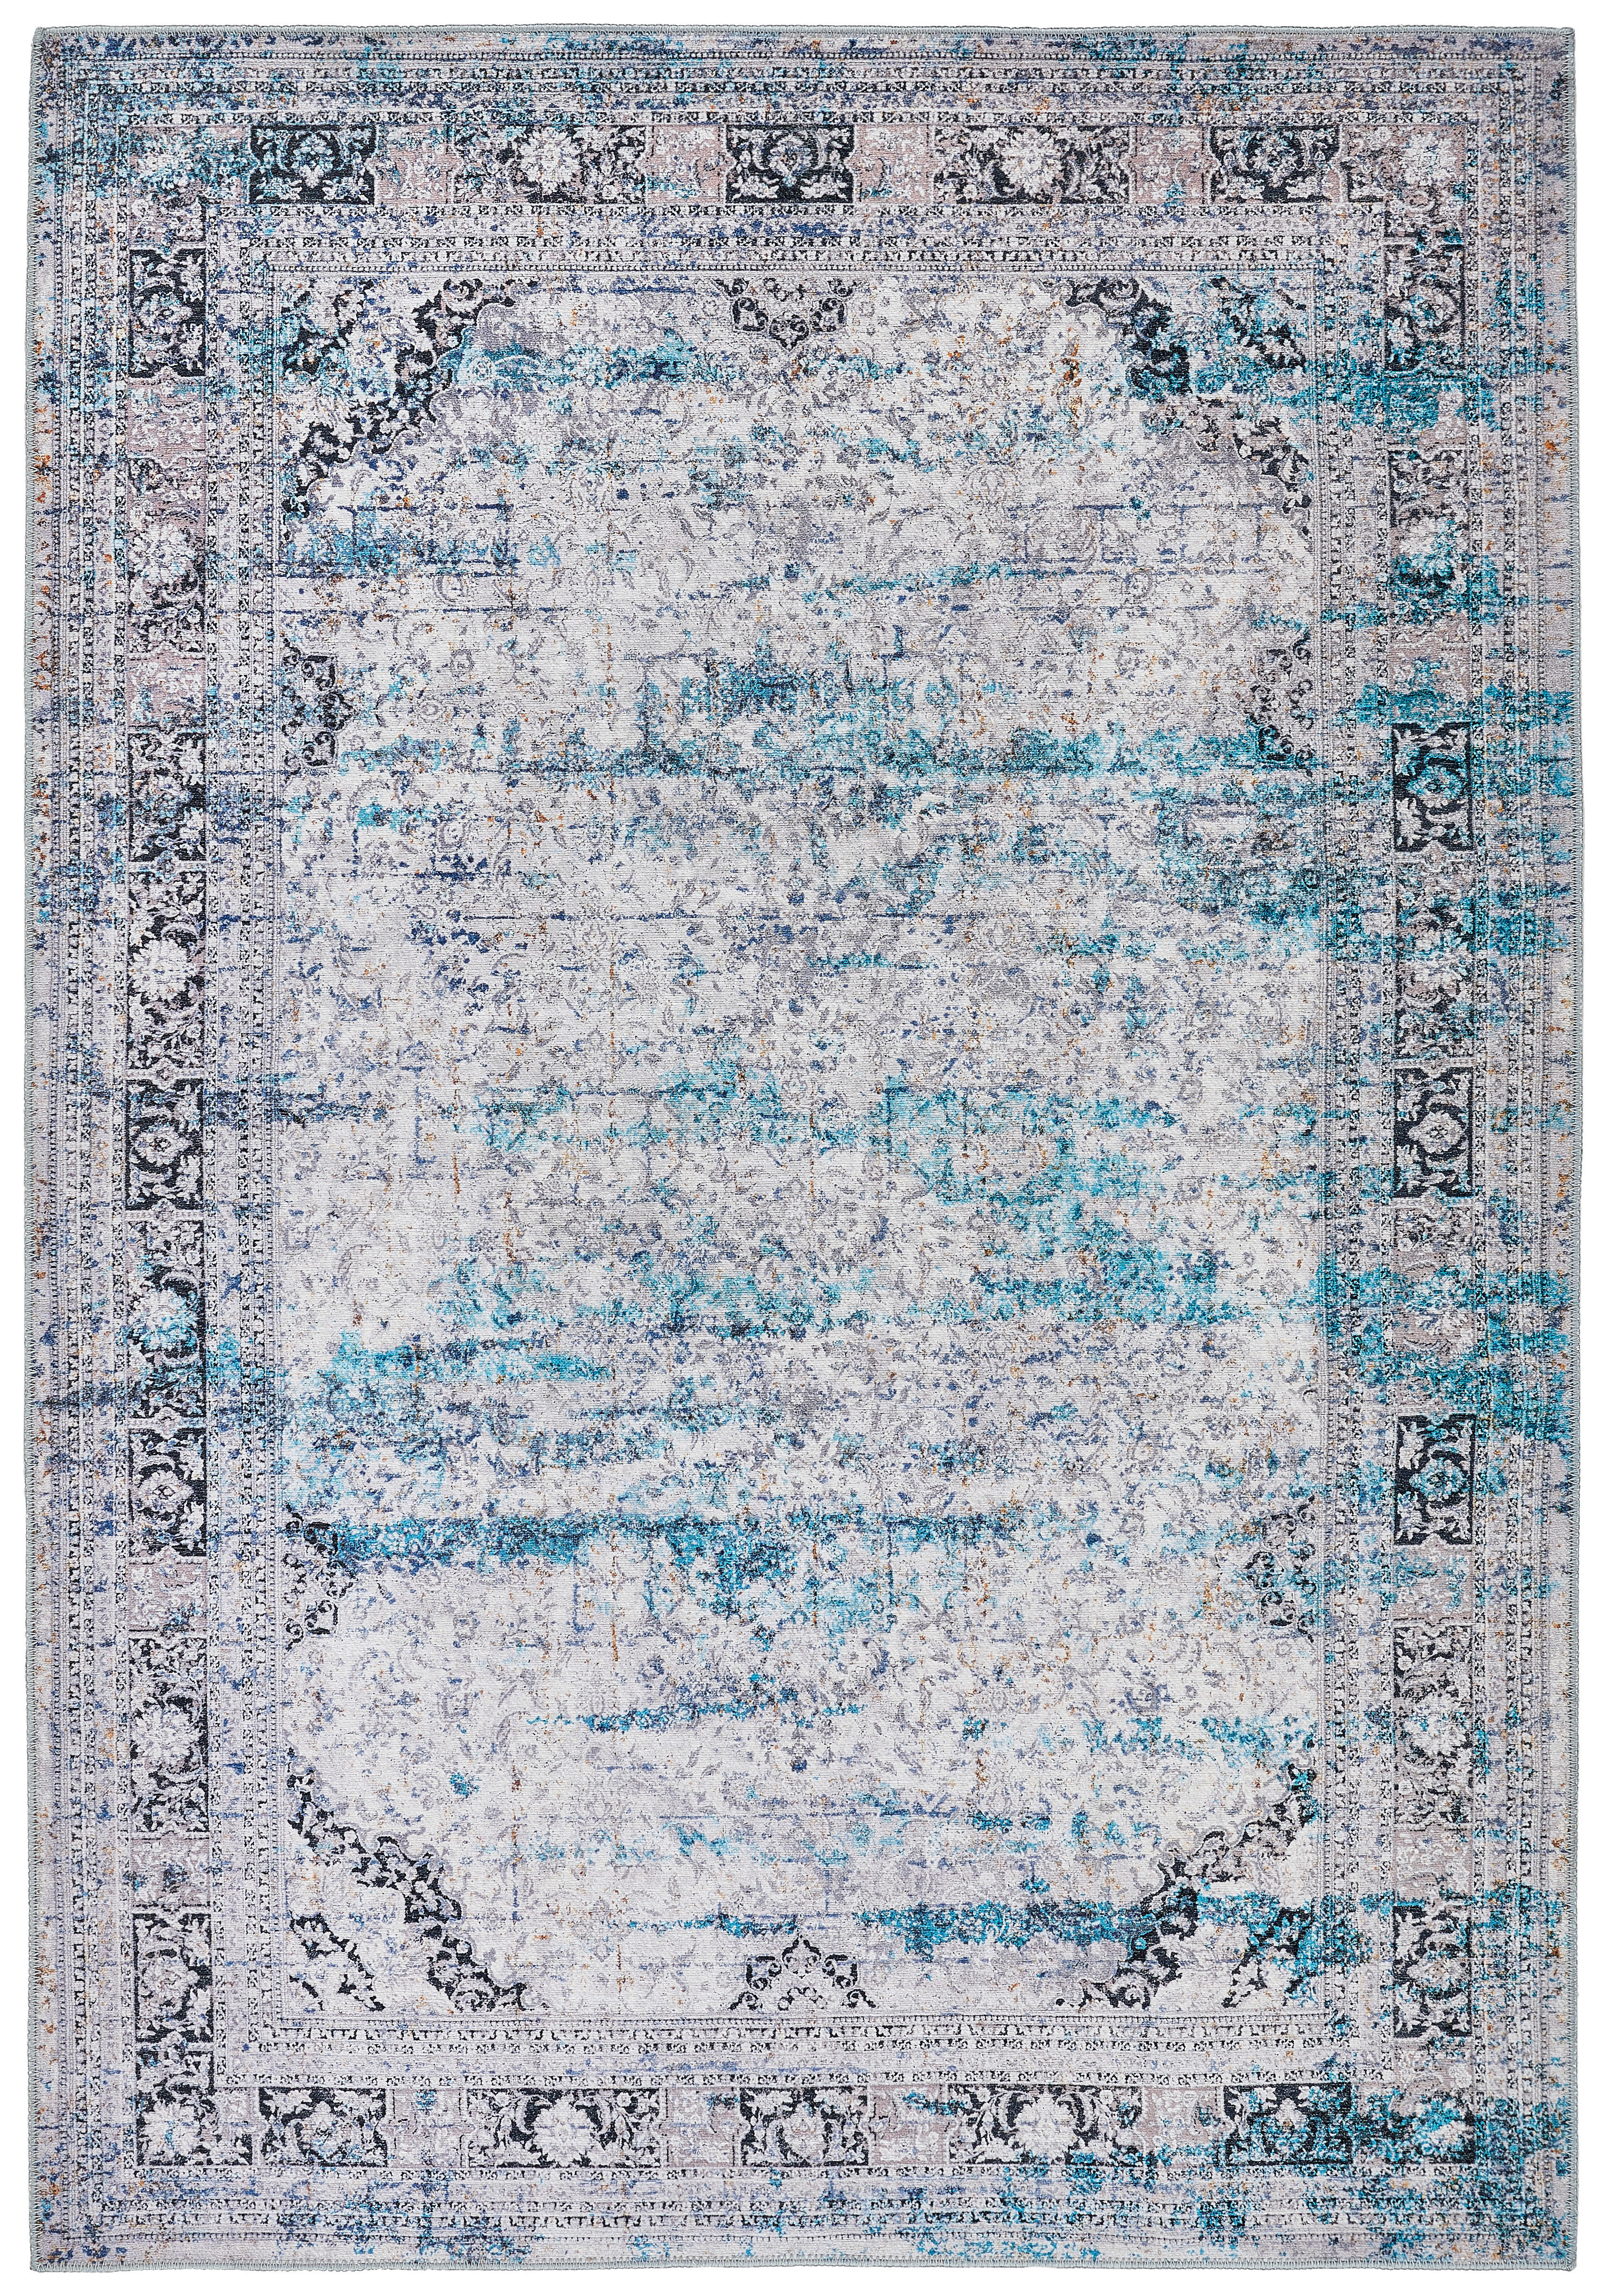 VINTAGE-TEPPICH Belvedere  80/150 cm  Blau, Grau   - Blau/Grau, Trend, Textil (80/150cm) - Novel